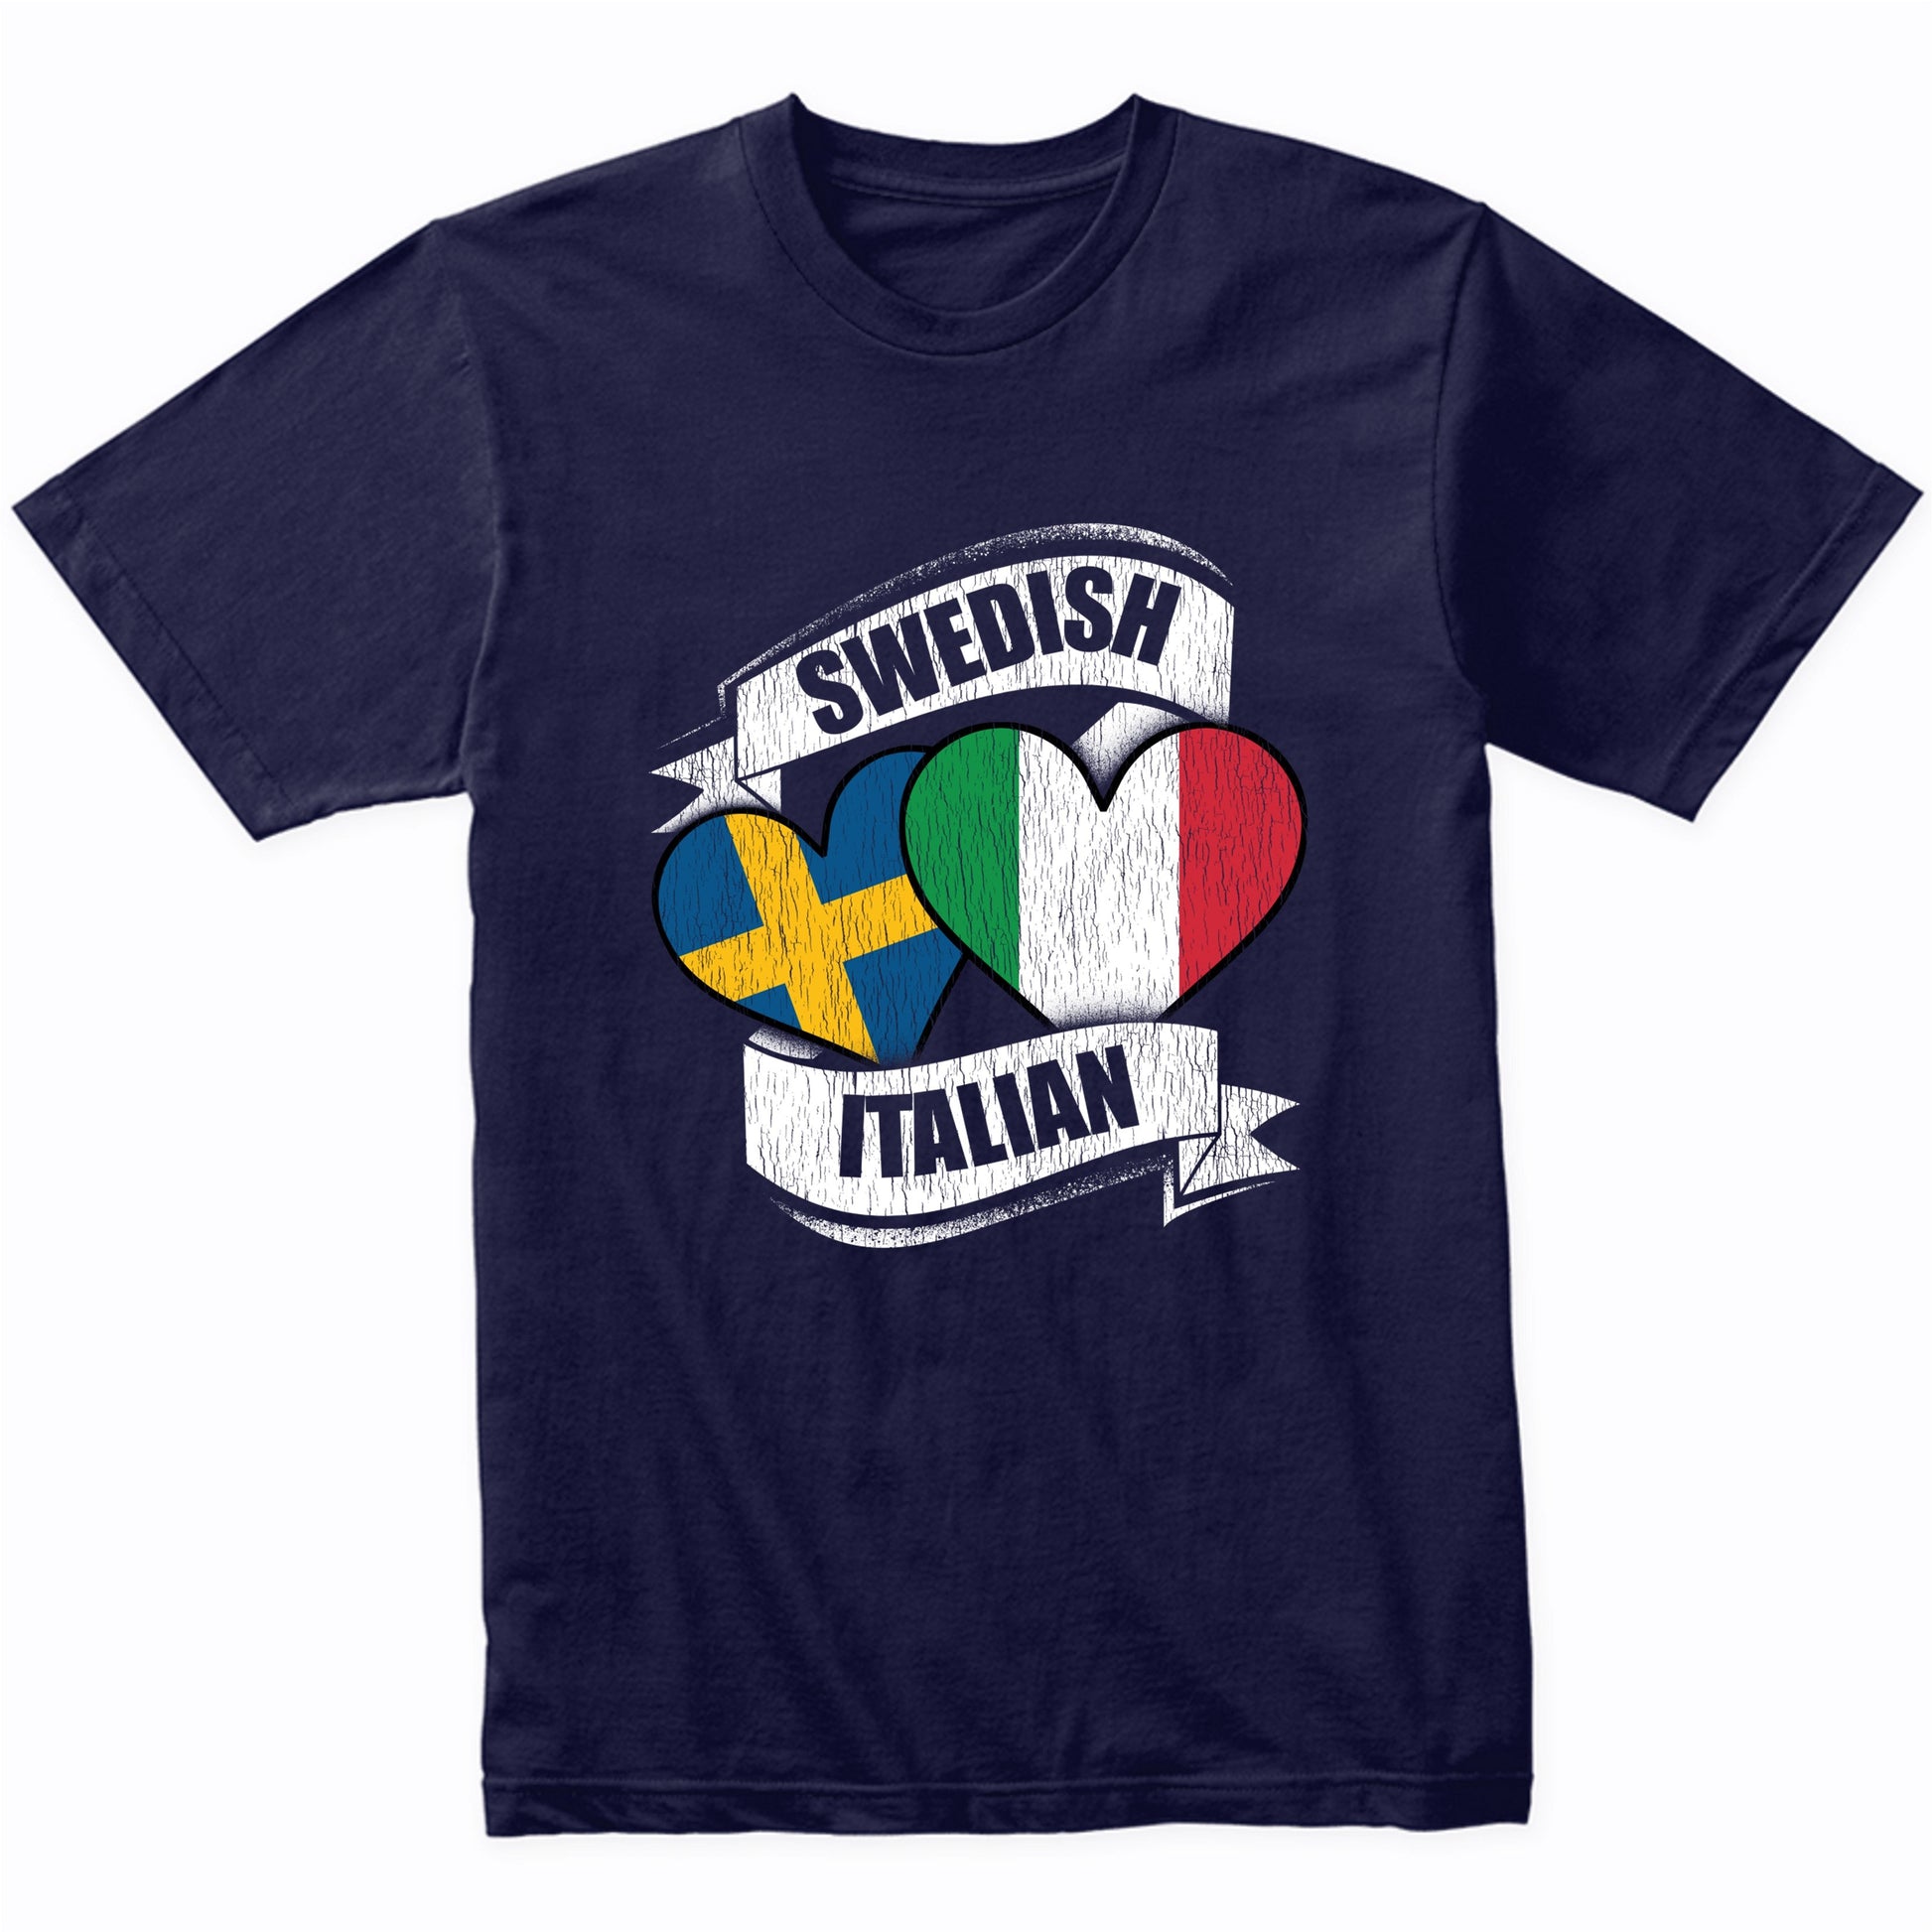 Swedish Italian Hearts Sweden Italy Flags T-Shirt